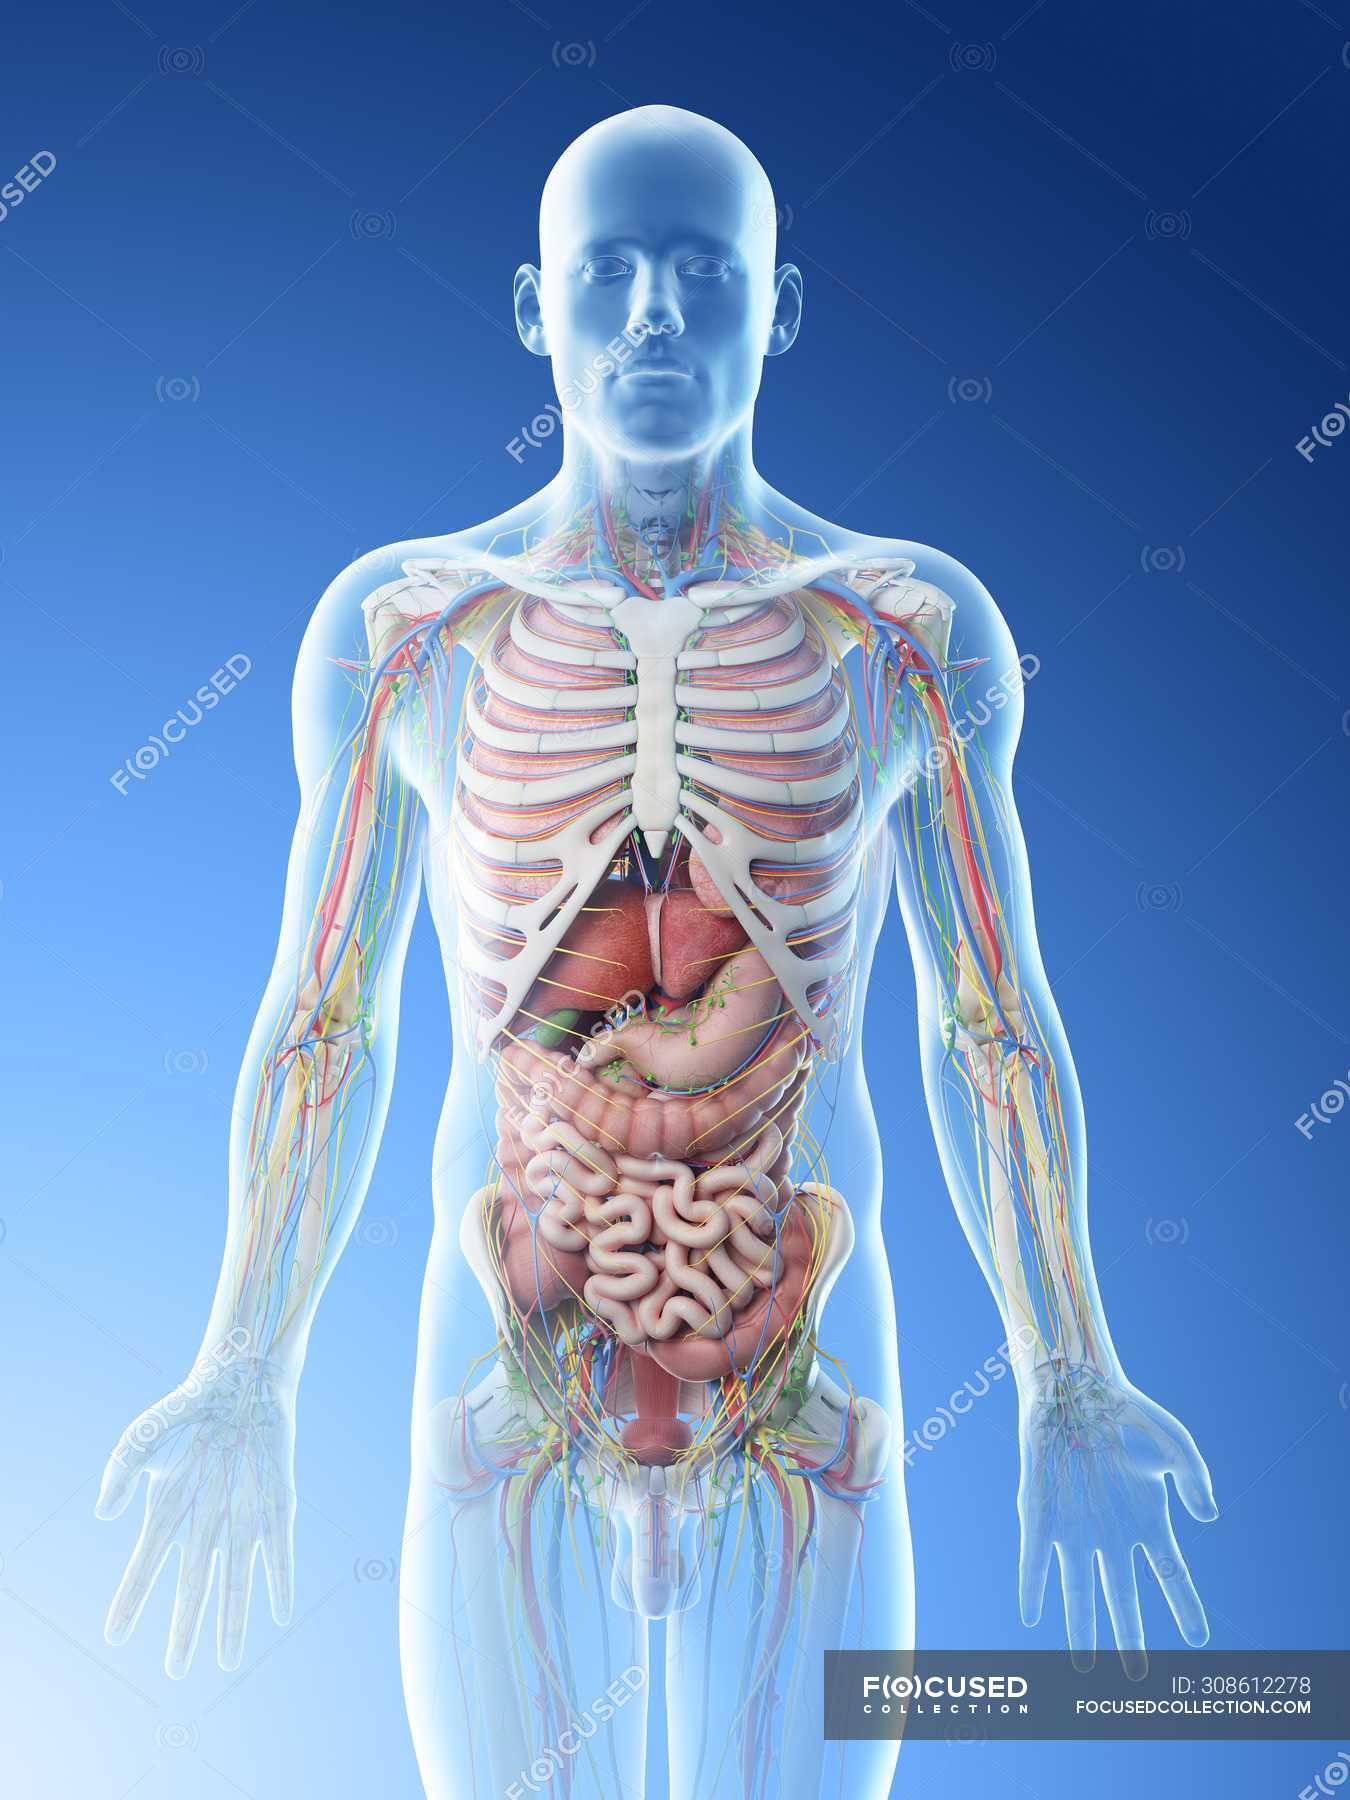 anatomy of male human body